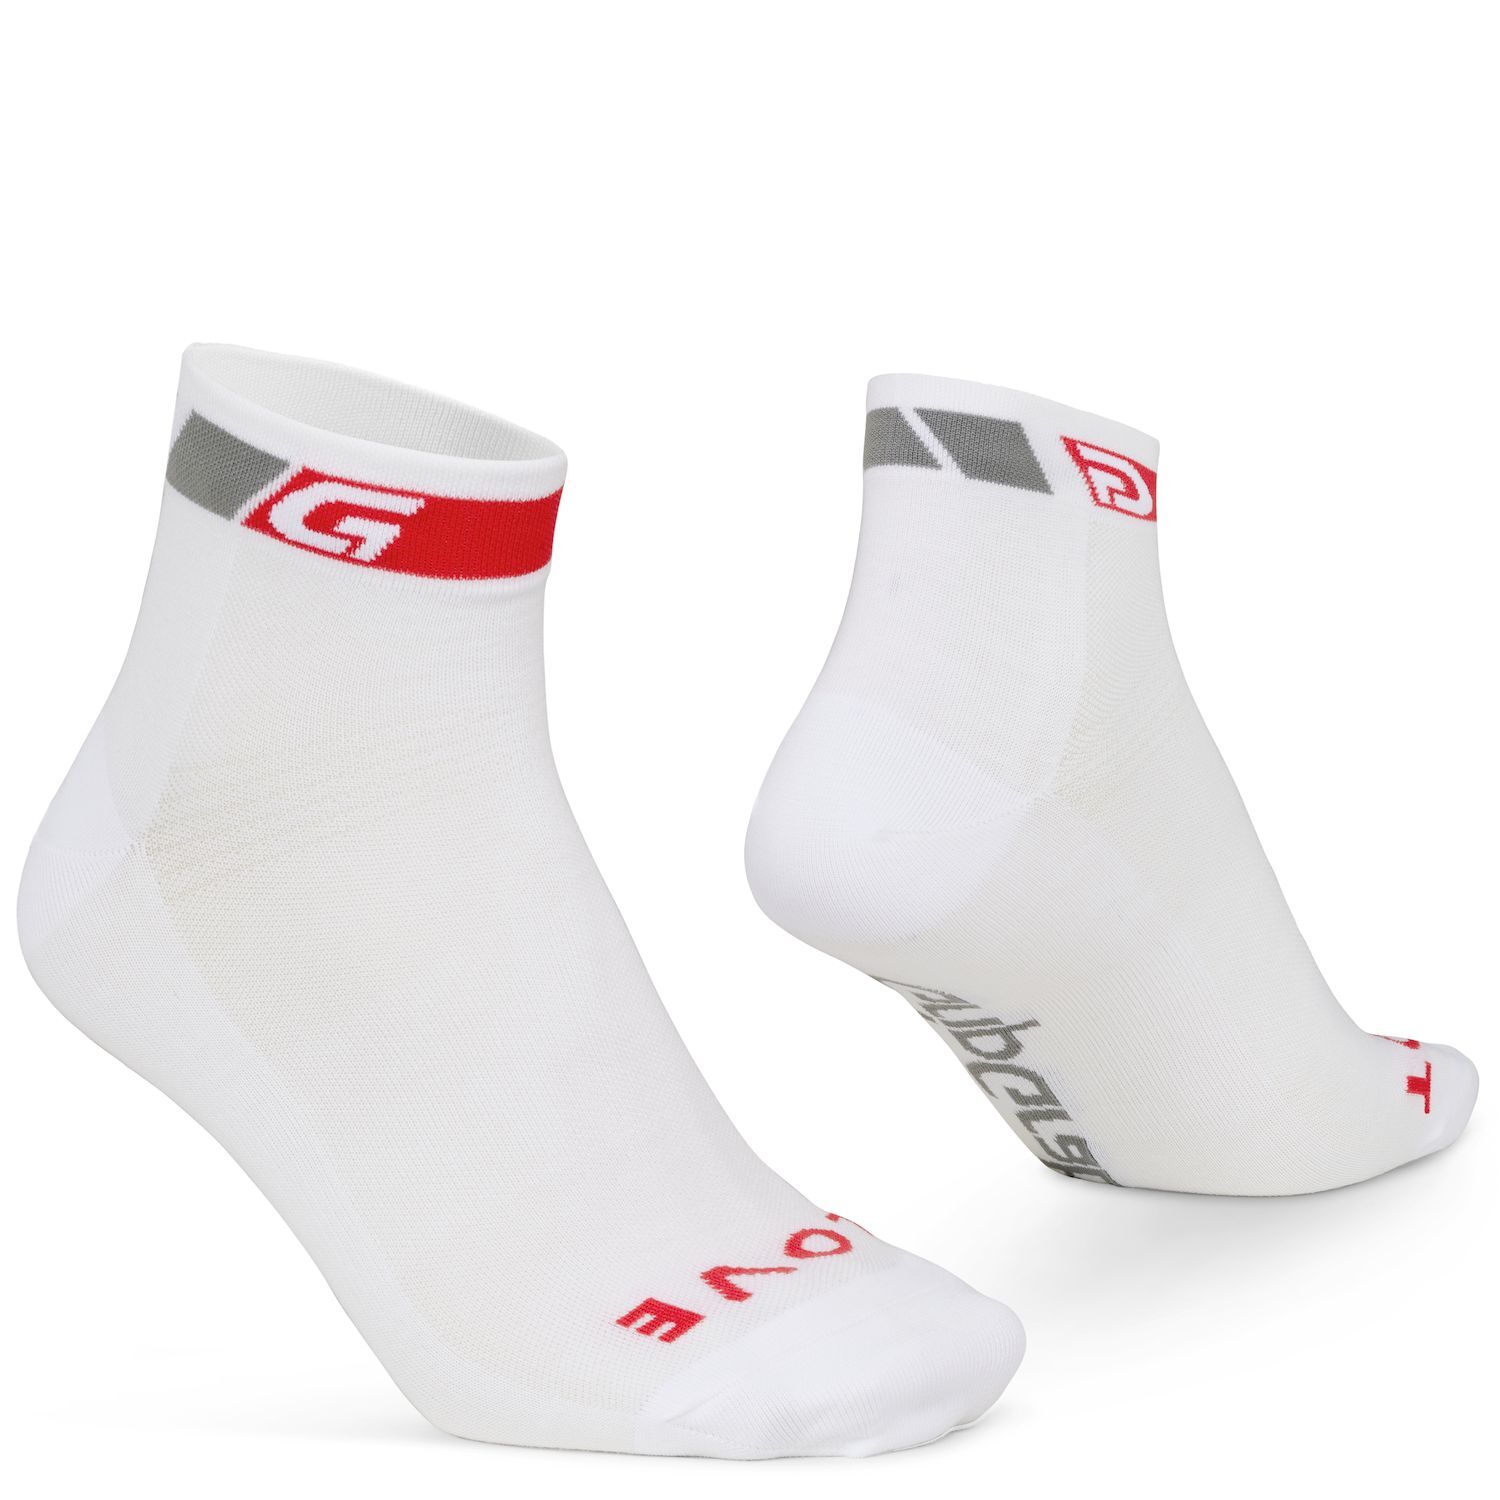 Grip Grab Classic Low Cut - Cycling socks